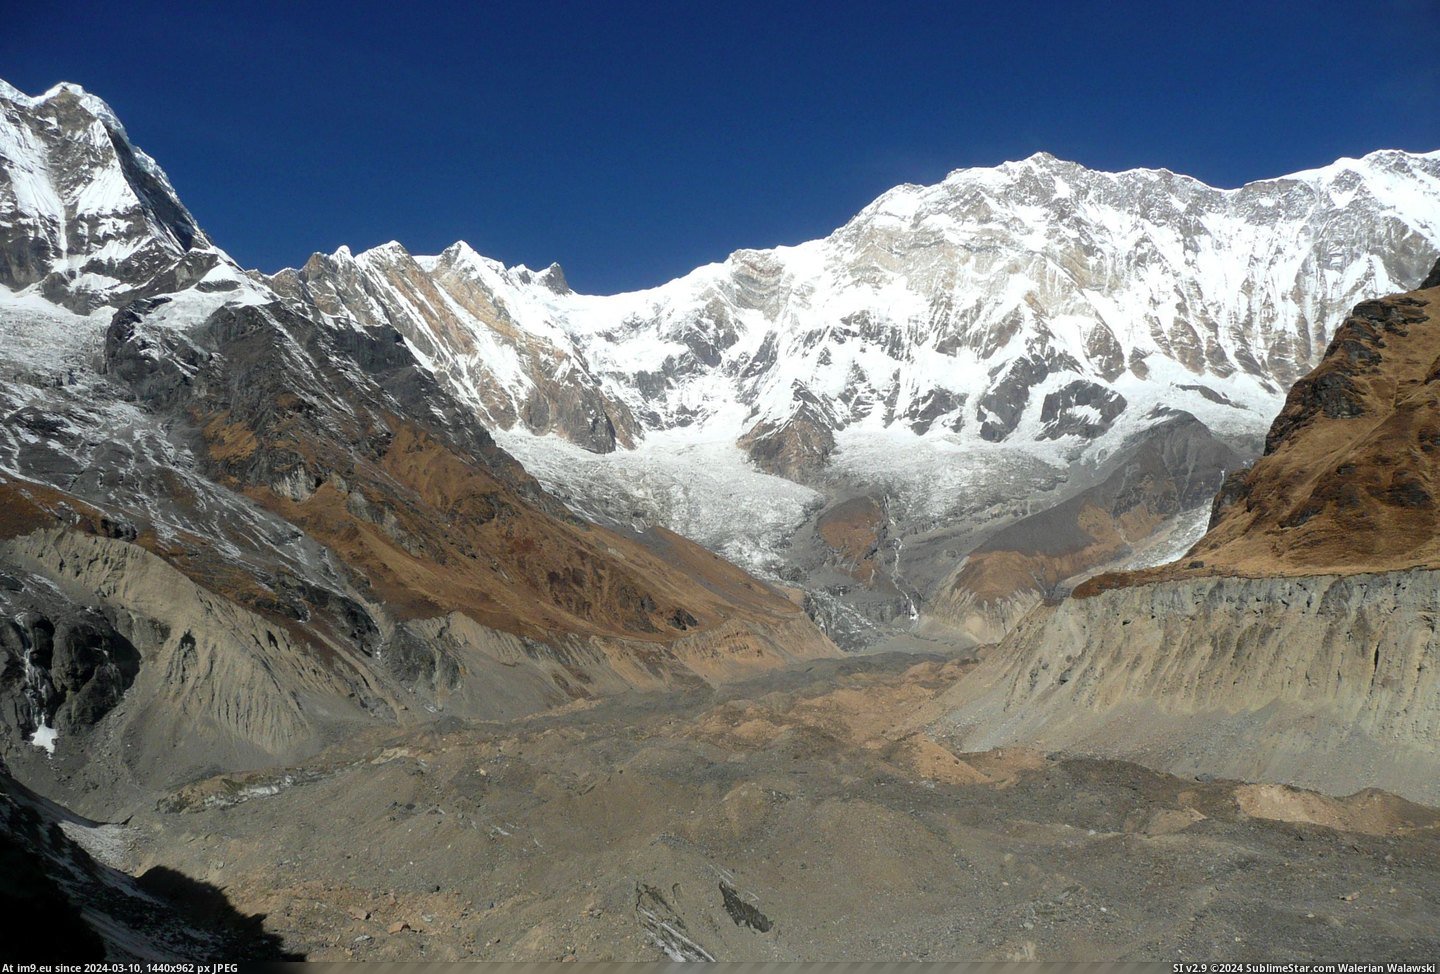 #Glacier #Covered #Nepal #Landslides #Wasn #Disappointed [Earthporn] The Landslides covered the Glacier, still wasn't Disappointed - Nepal (2764X1859) Pic. (Obraz z album My r/EARTHPORN favs))